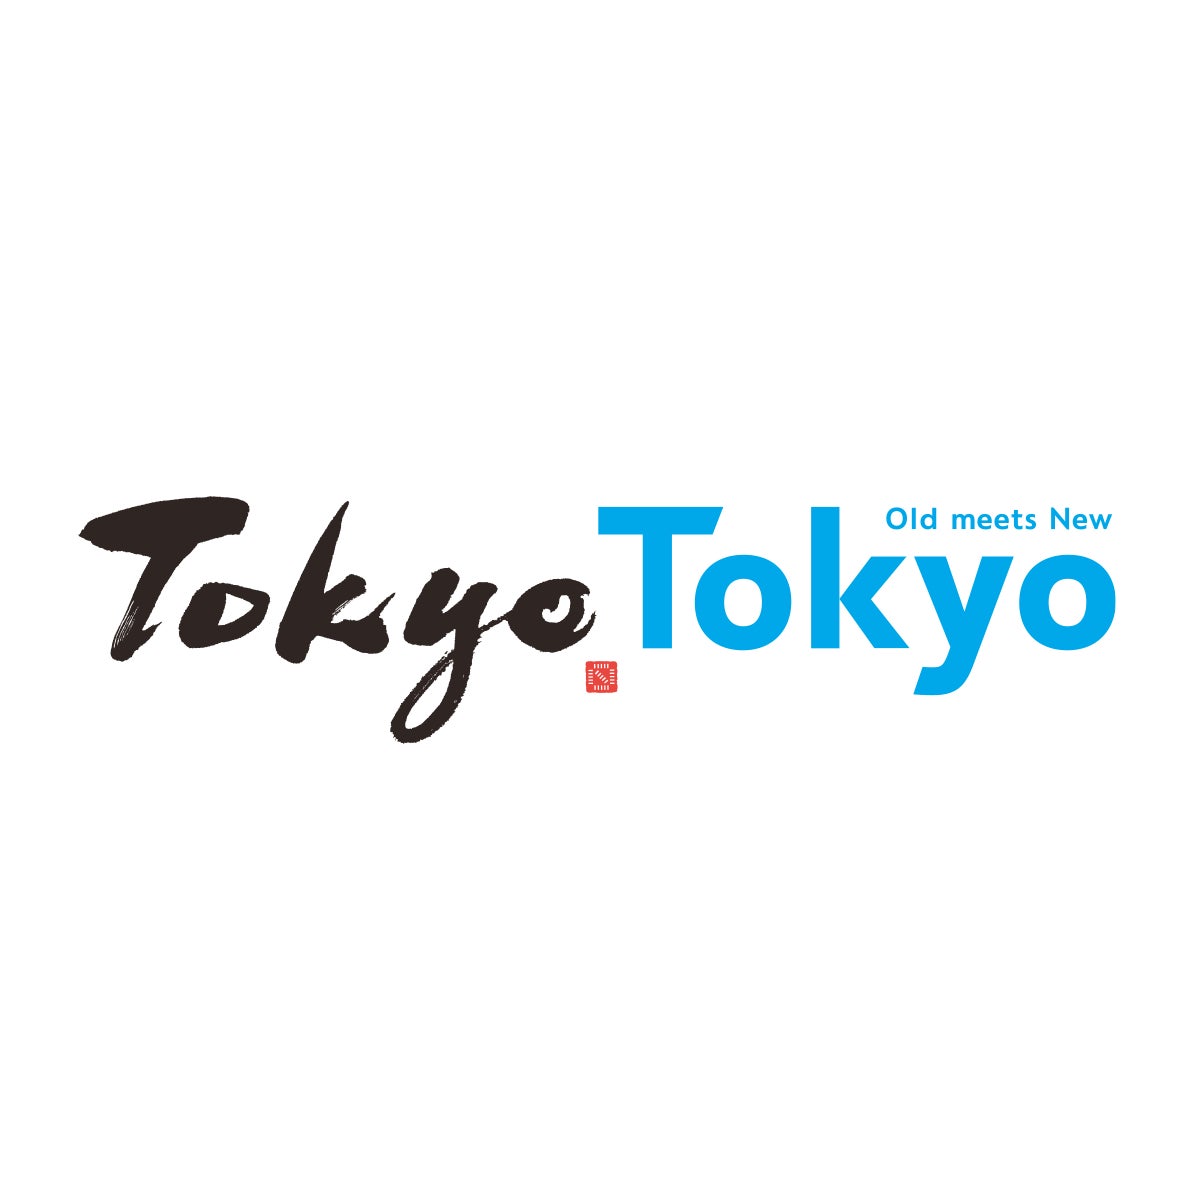 TokyoTokyoアイコン